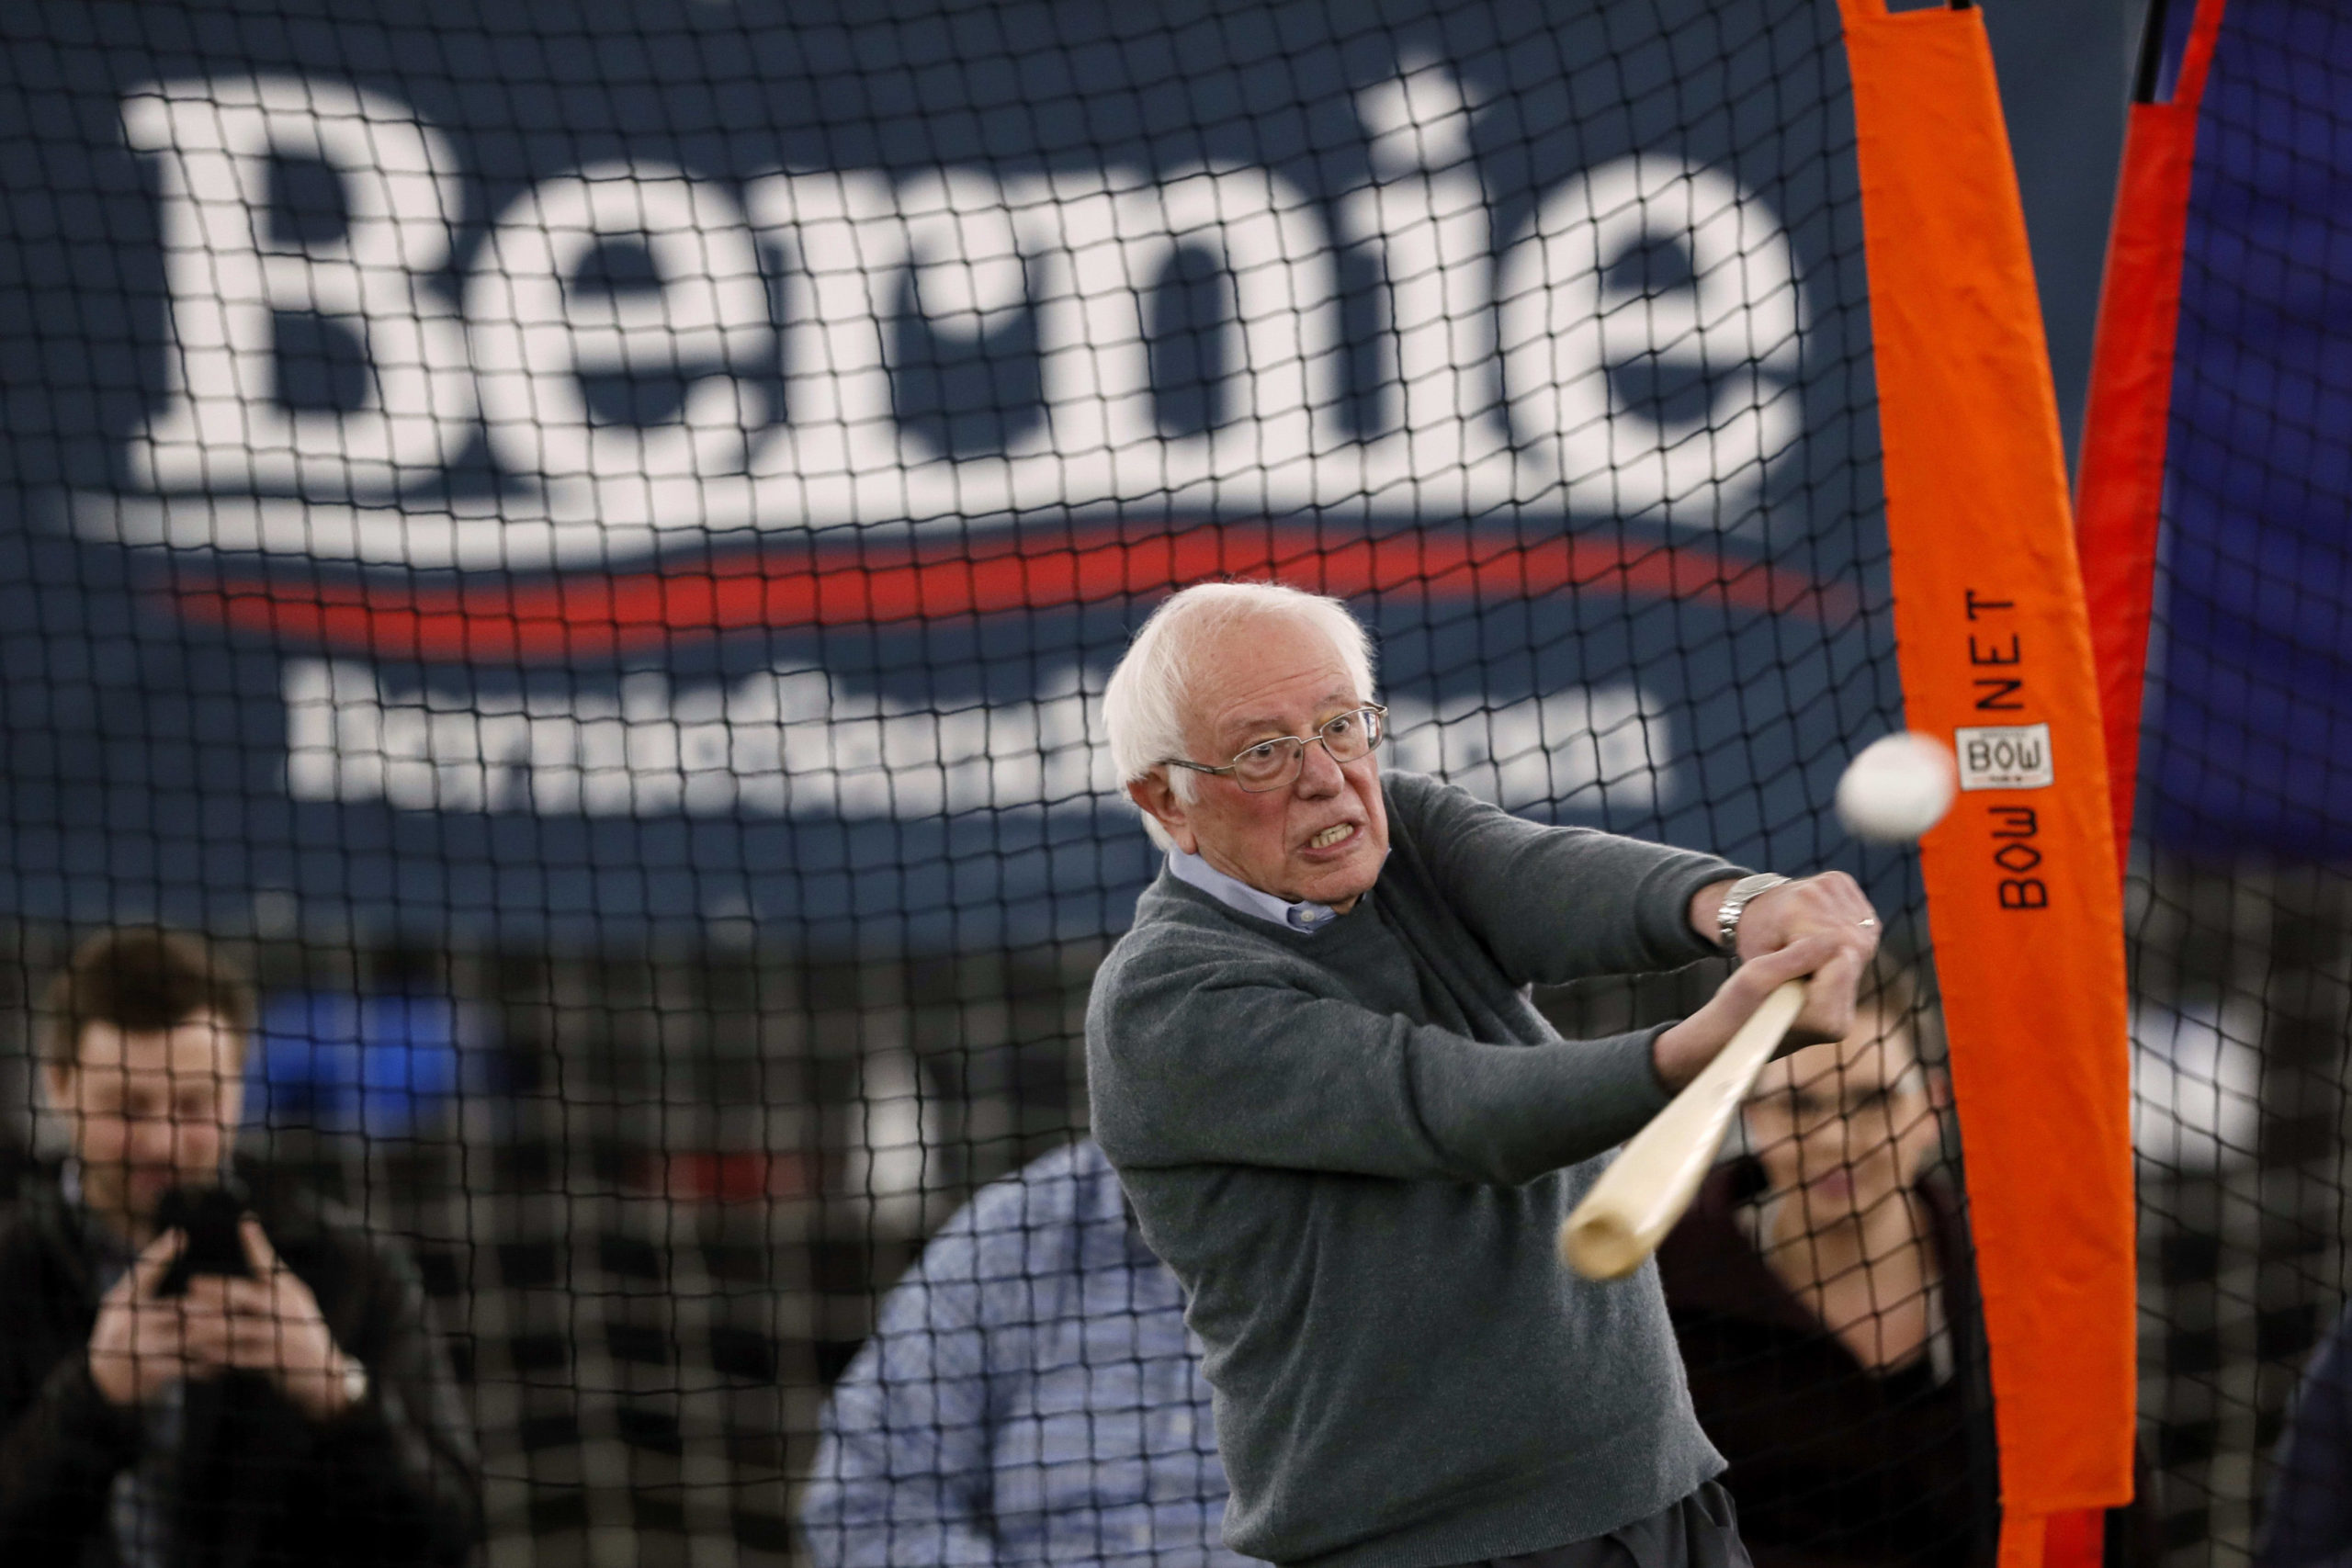 Bernie Sanders fights for minor league baseball in Iowa 2020 caucuses